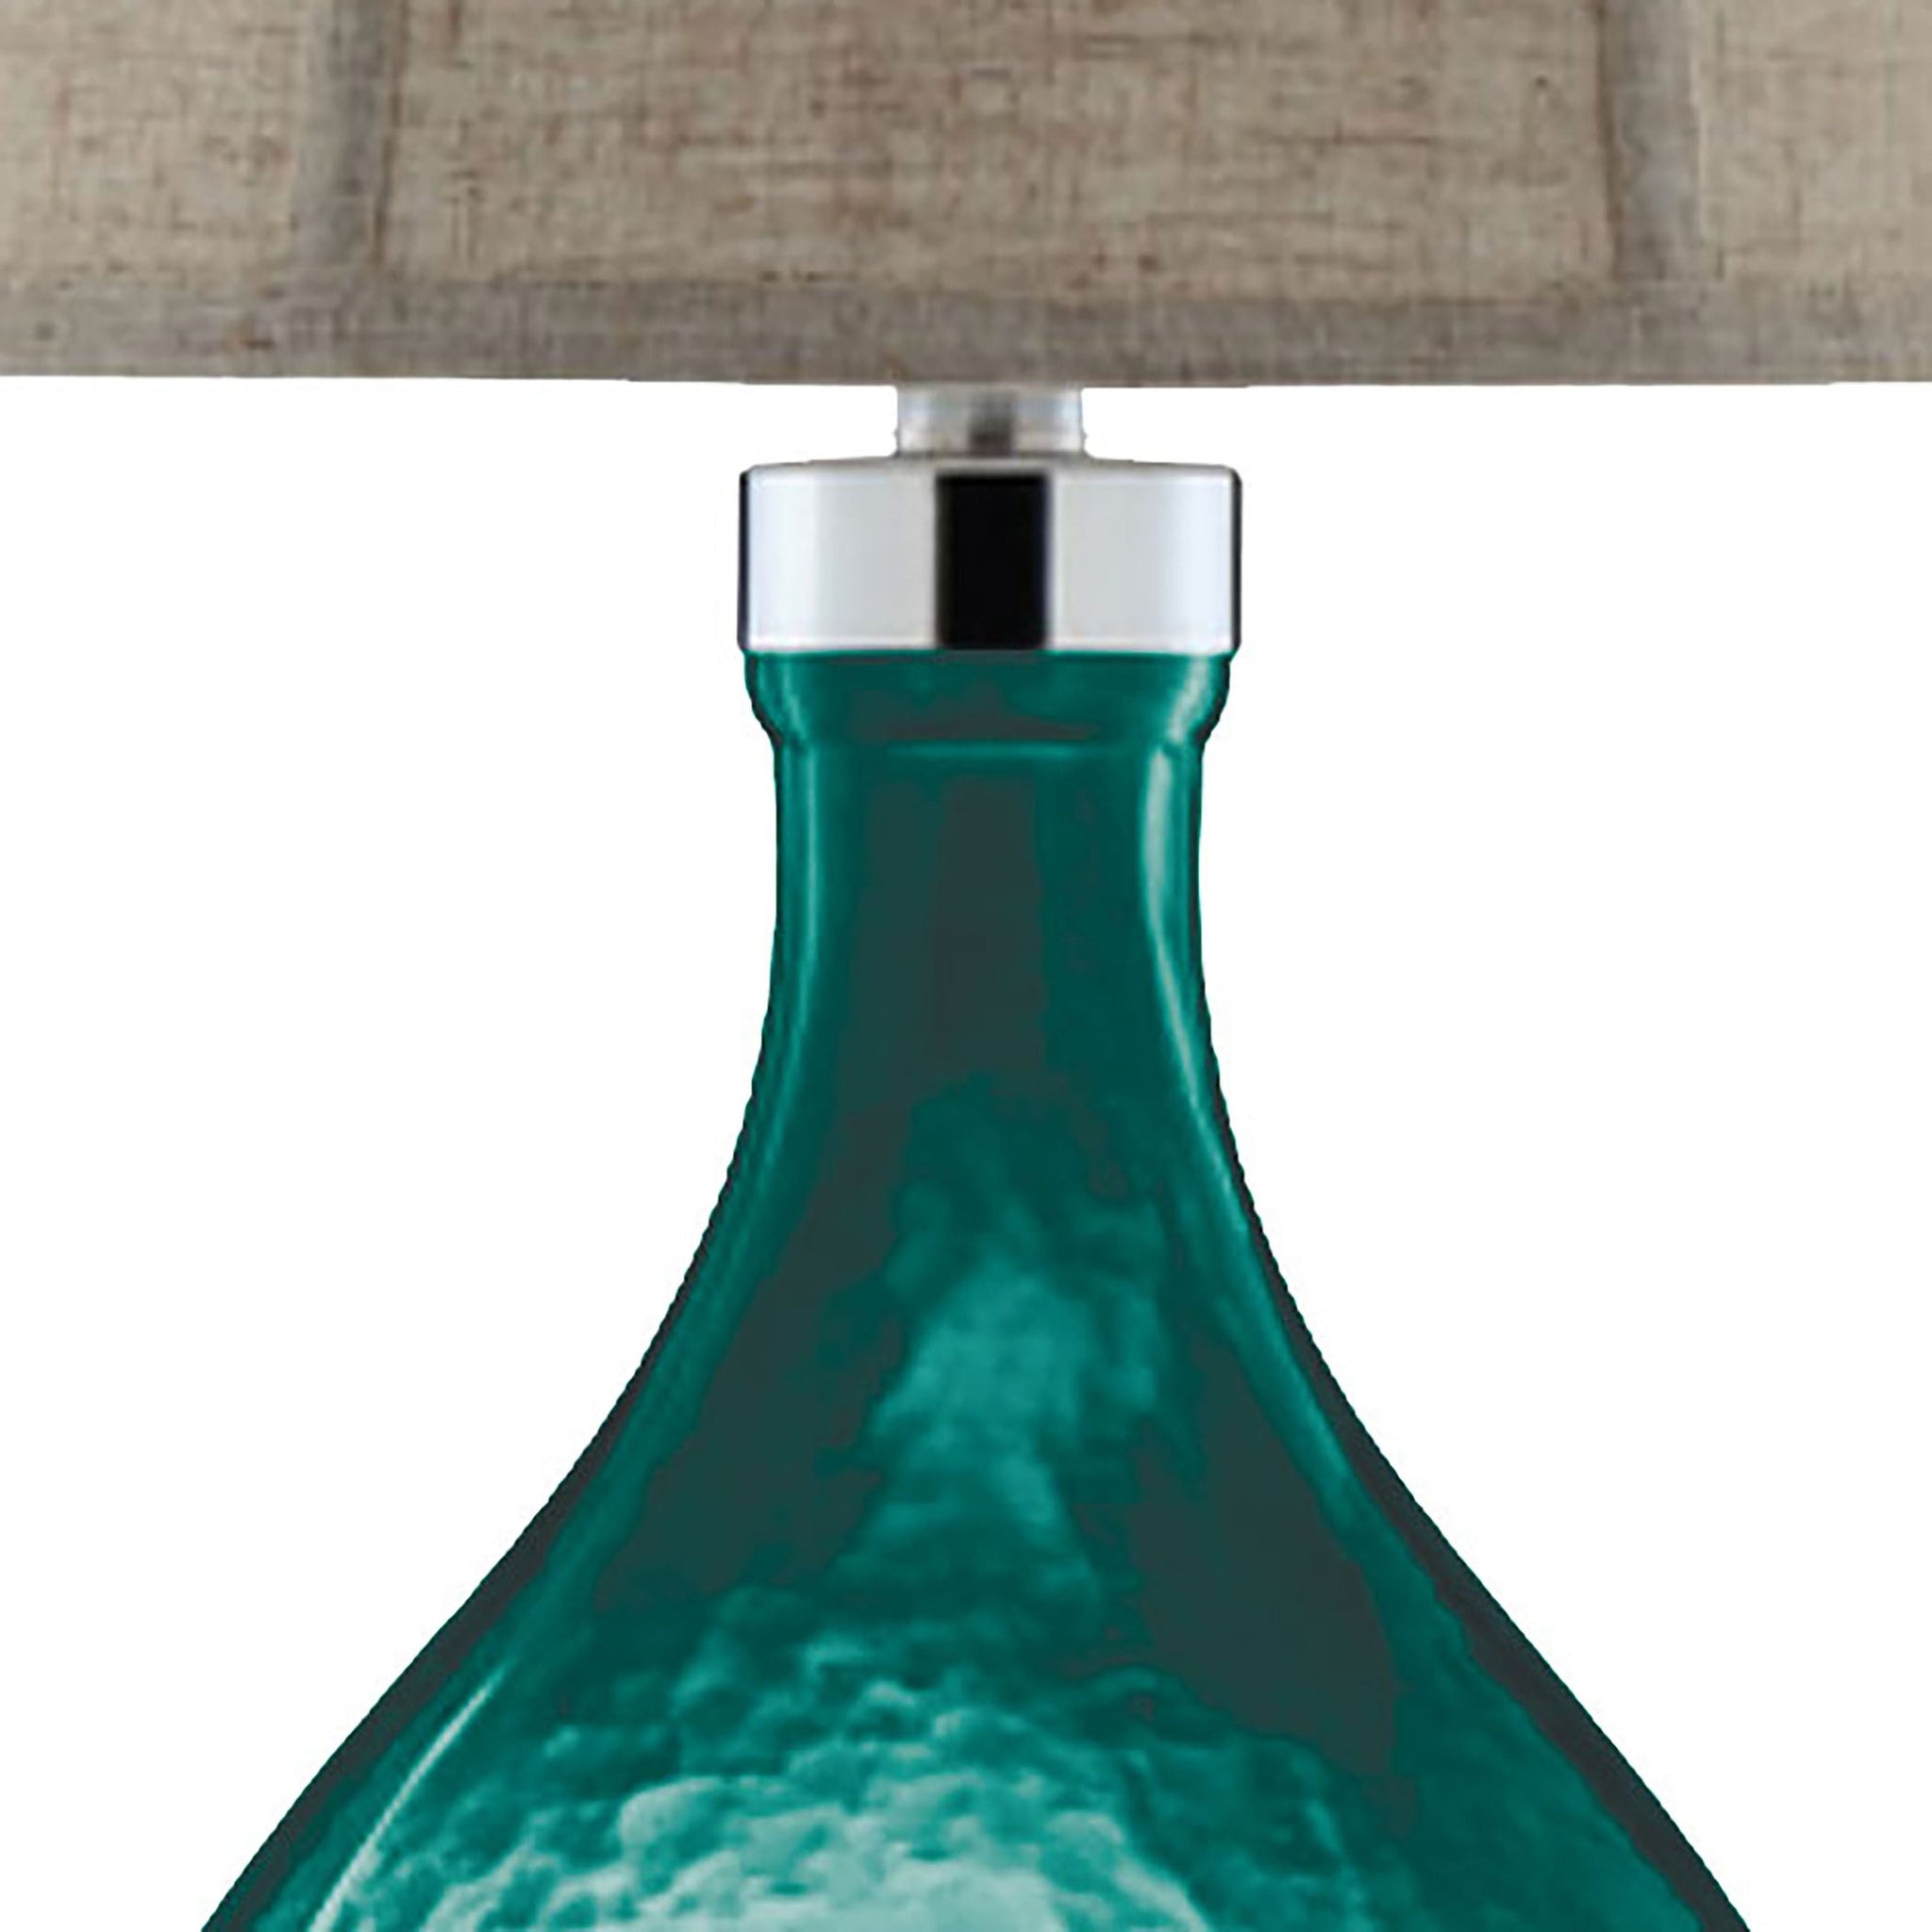 Ariga 30.75" High 1-Light Table Lamp